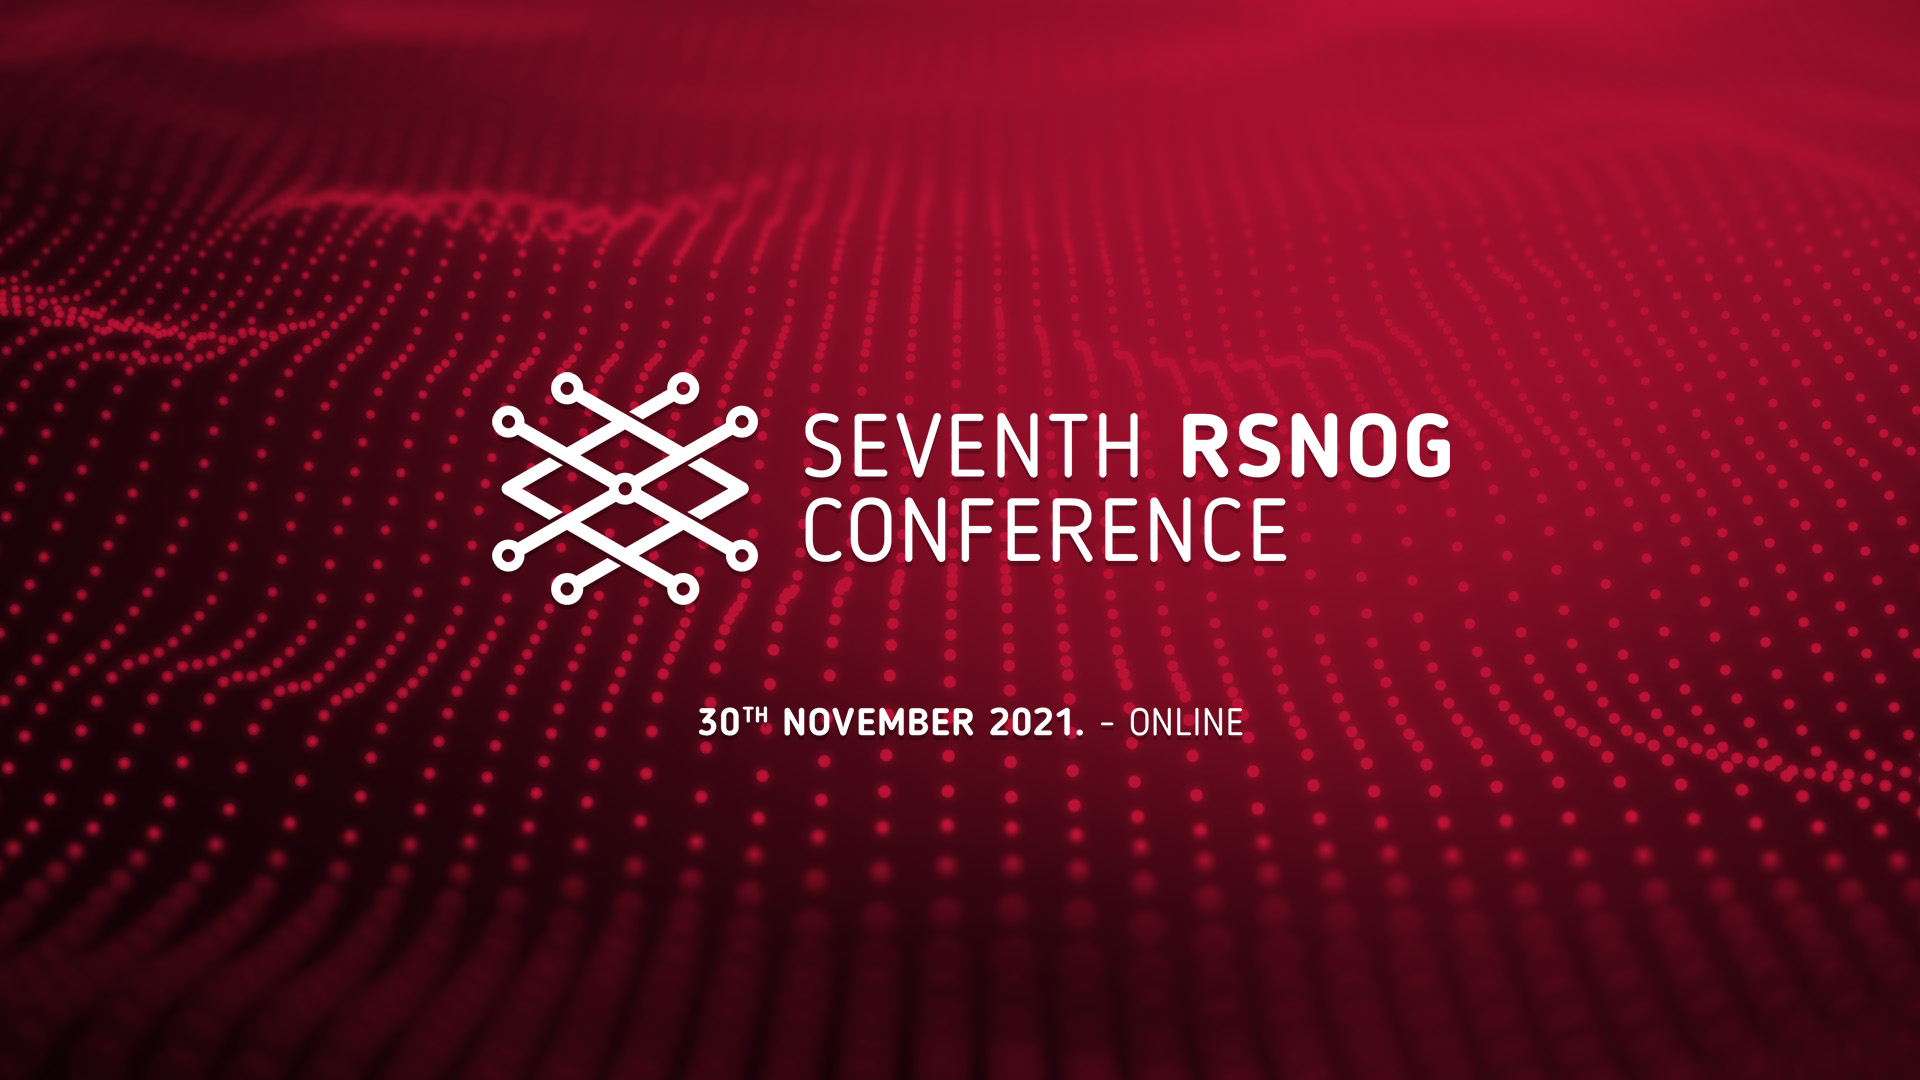 The Seventh RSNOG Conference – for a safer, faster, more stable Internet